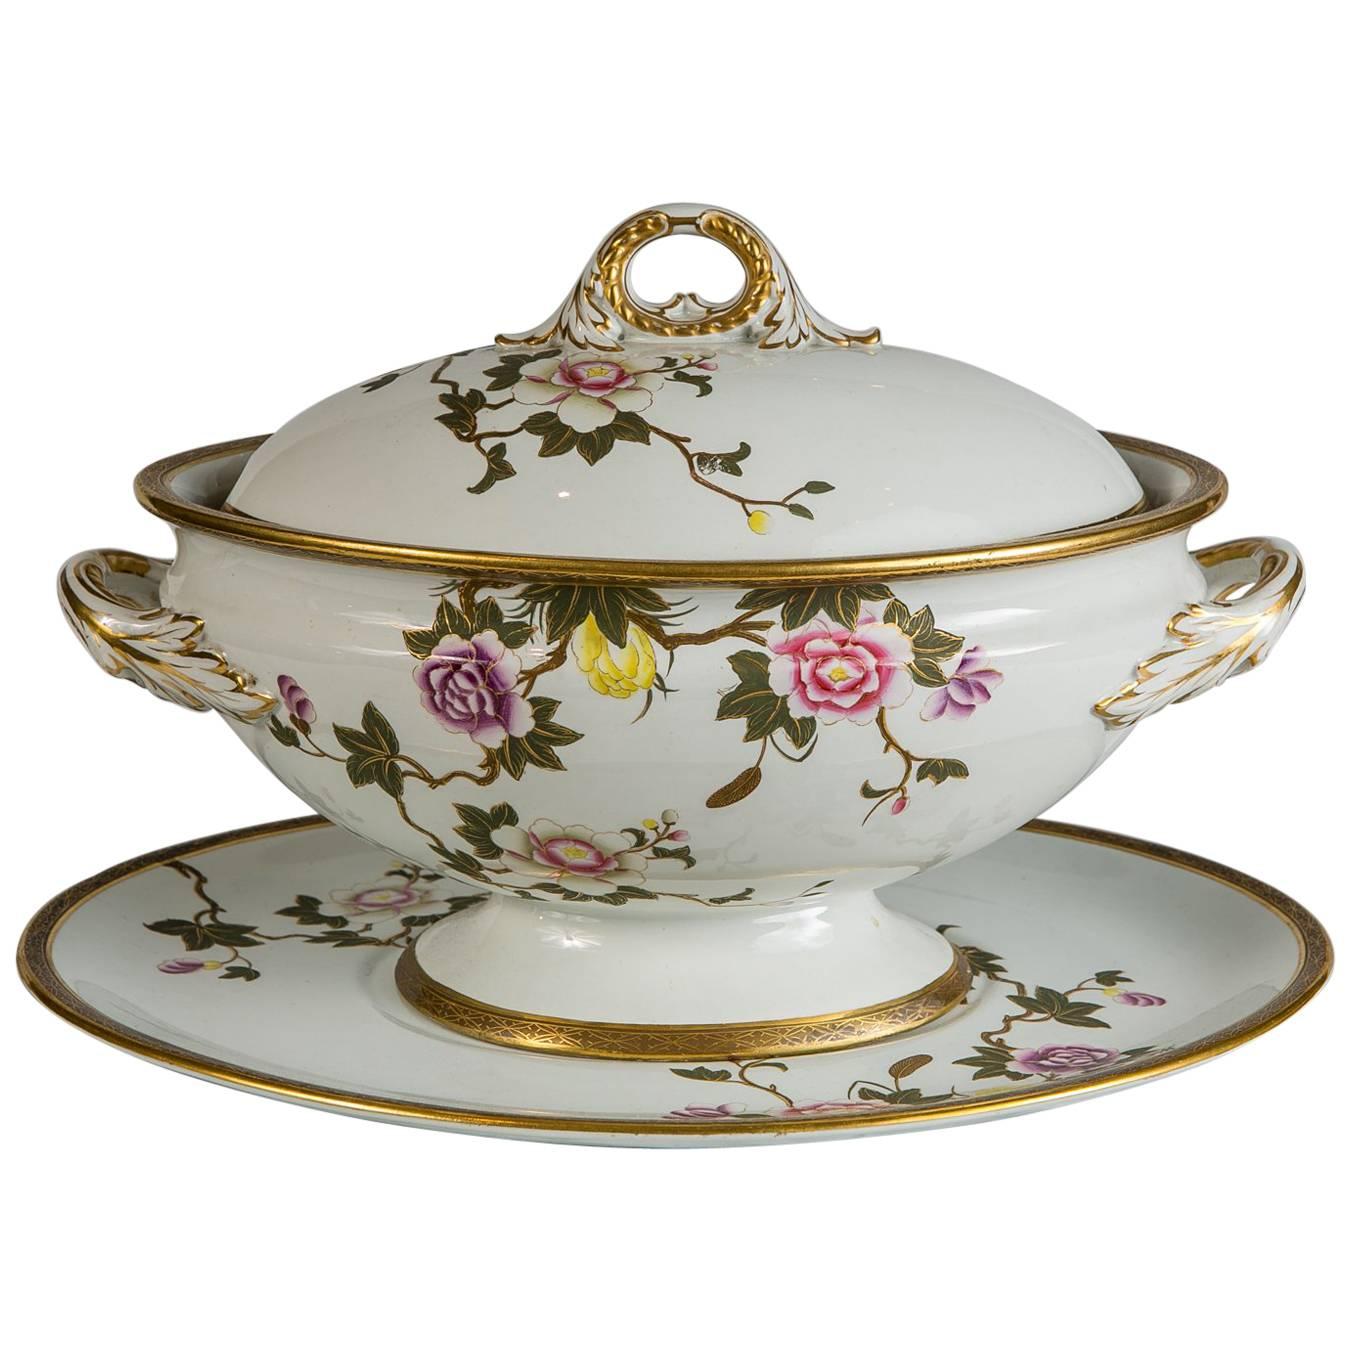 Royal Worcester Porcelain Soup Tureen Made in 1851